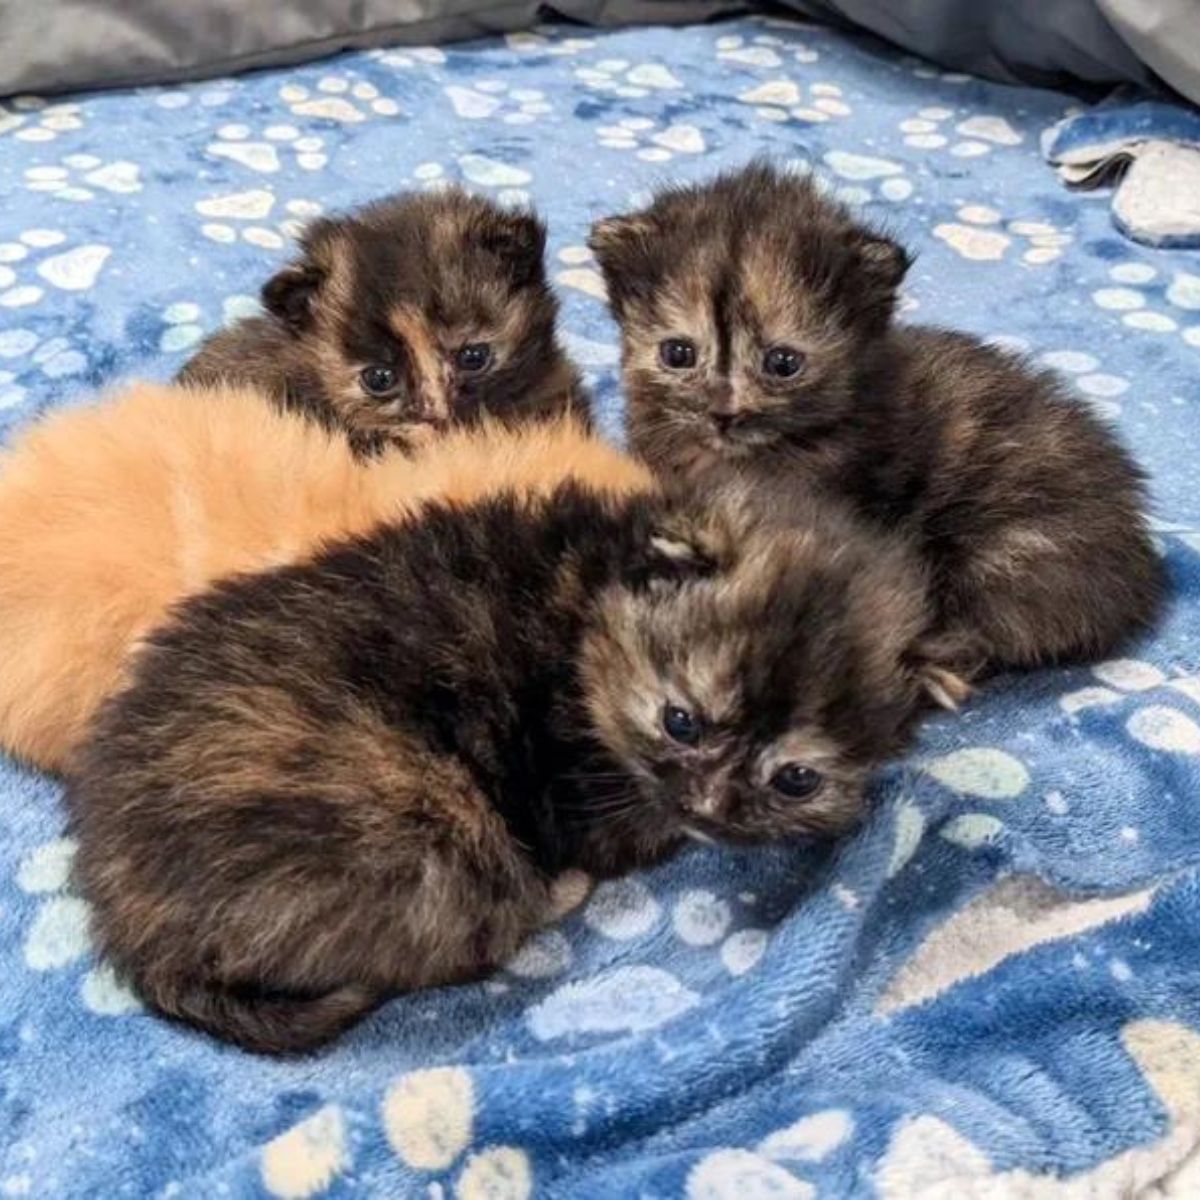 photo of kittens